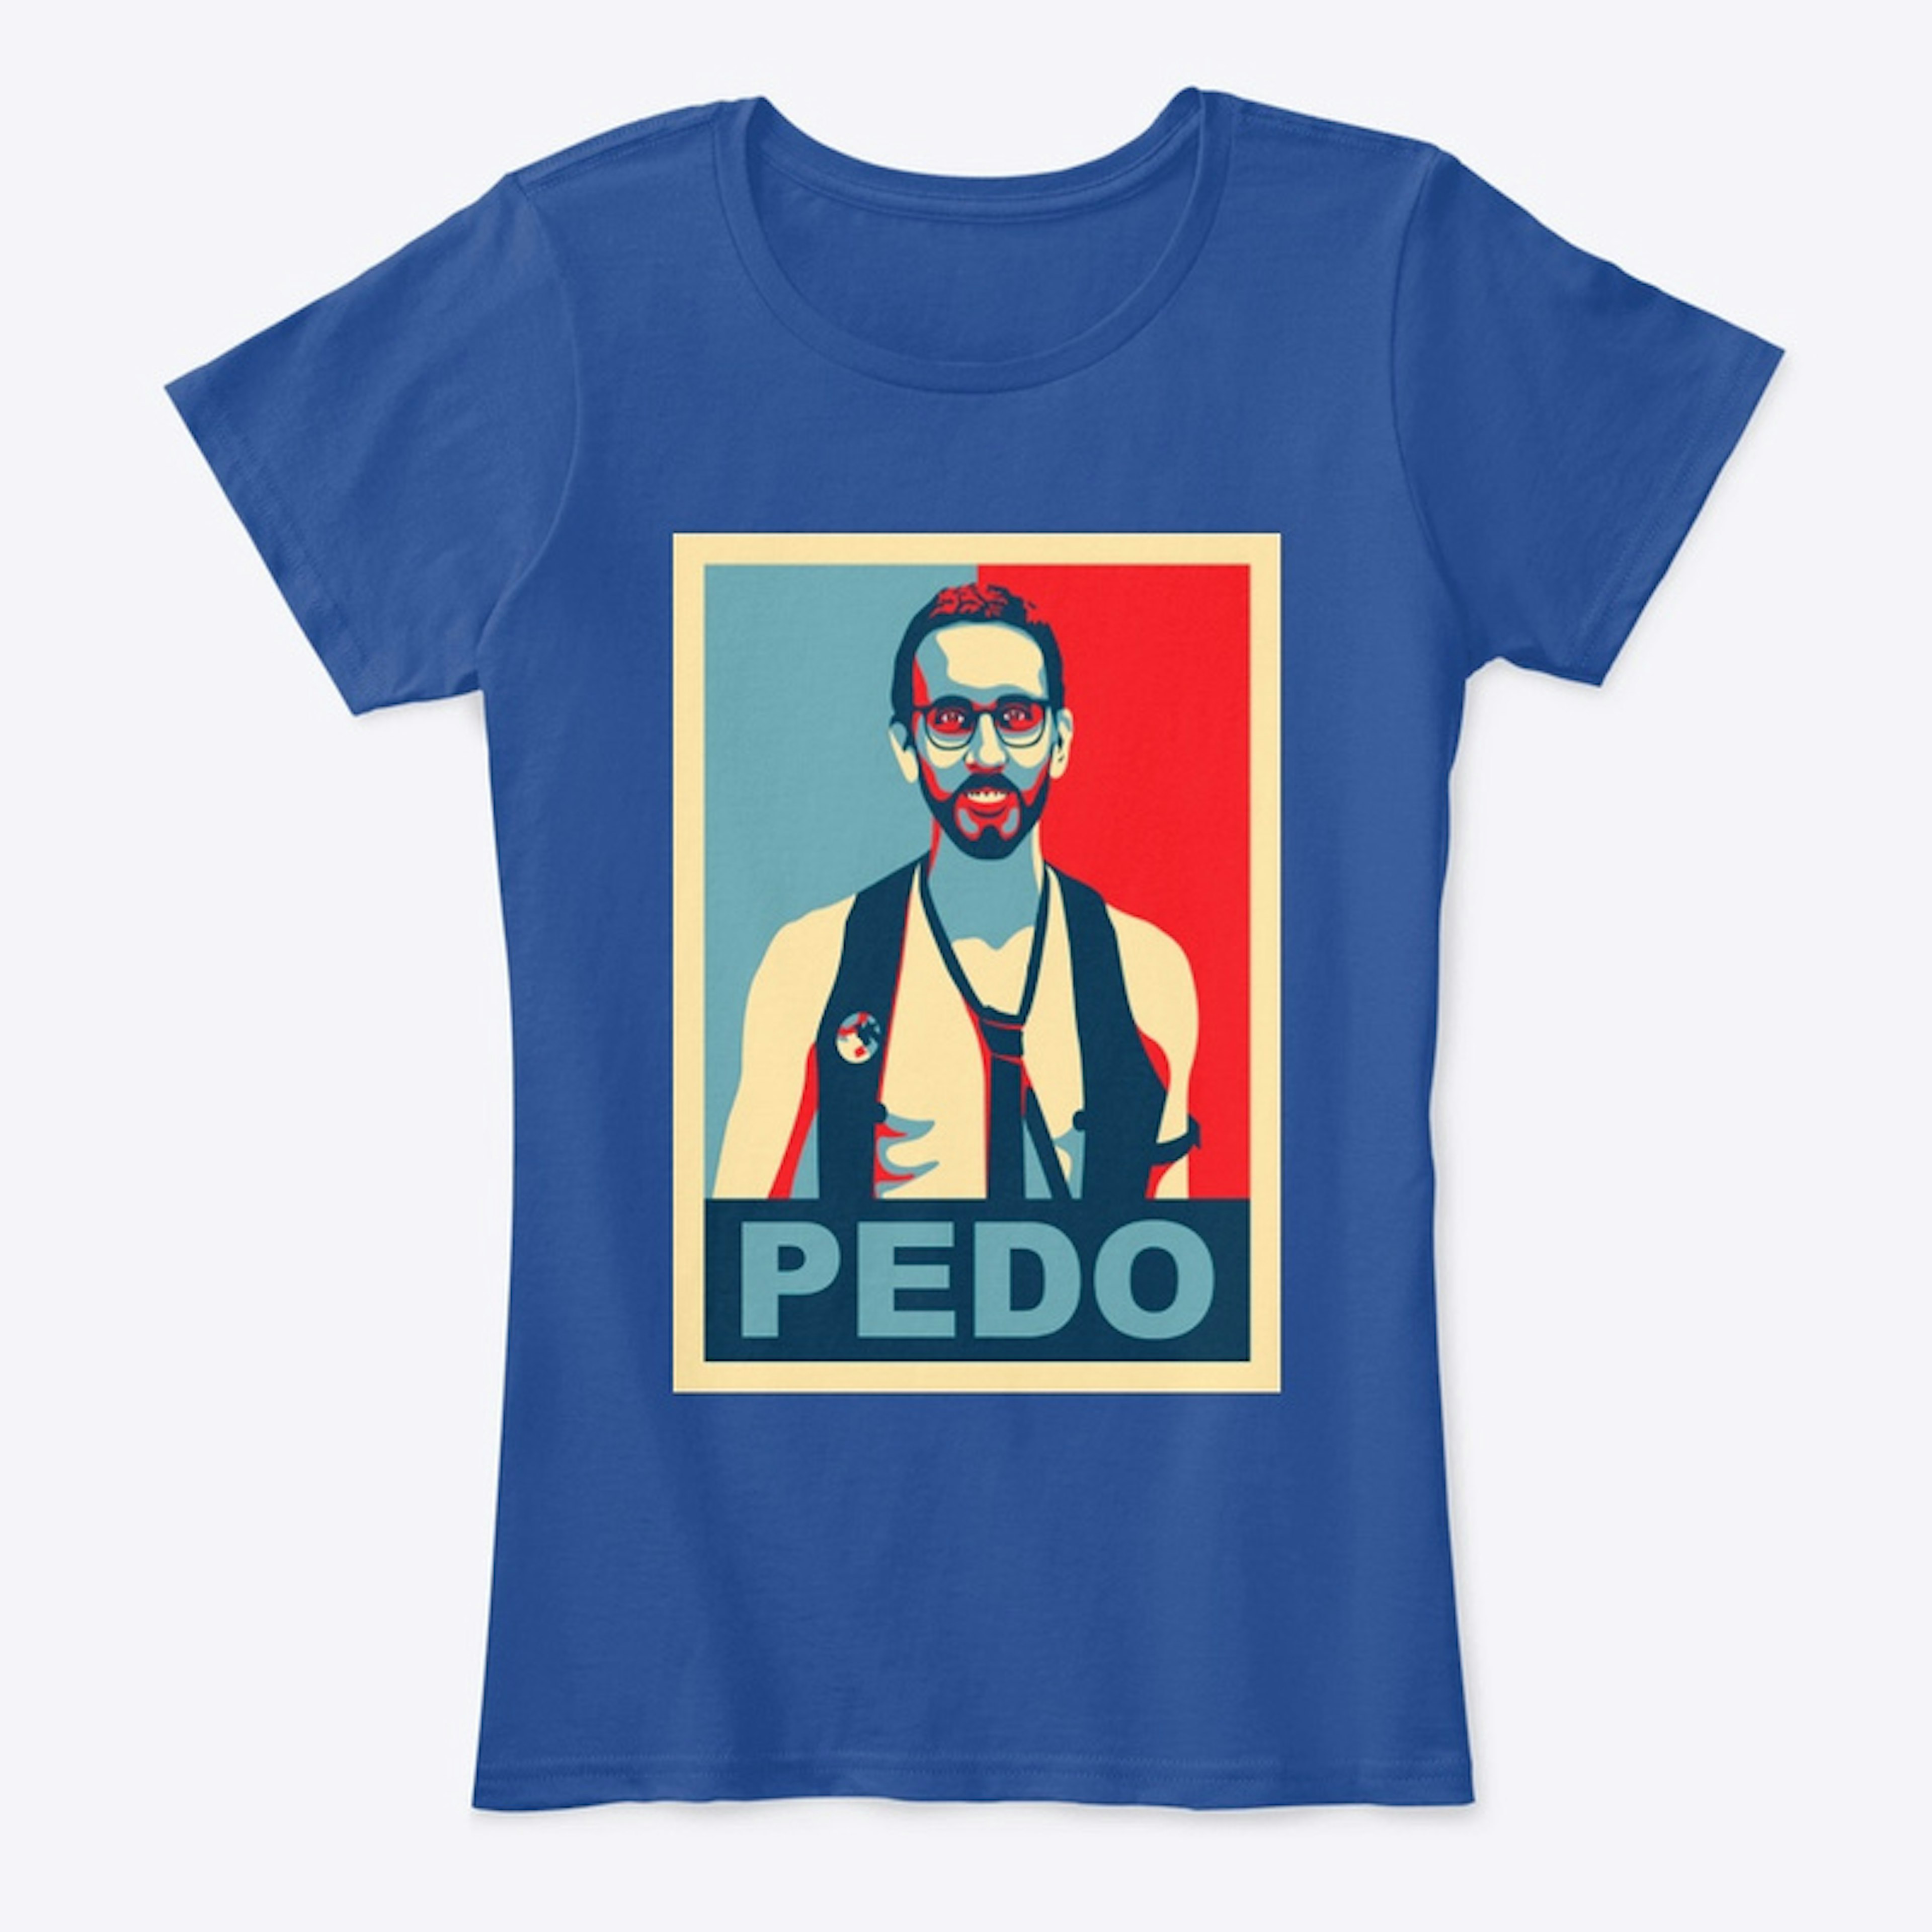 Wiener "PEDO" T-Shirt